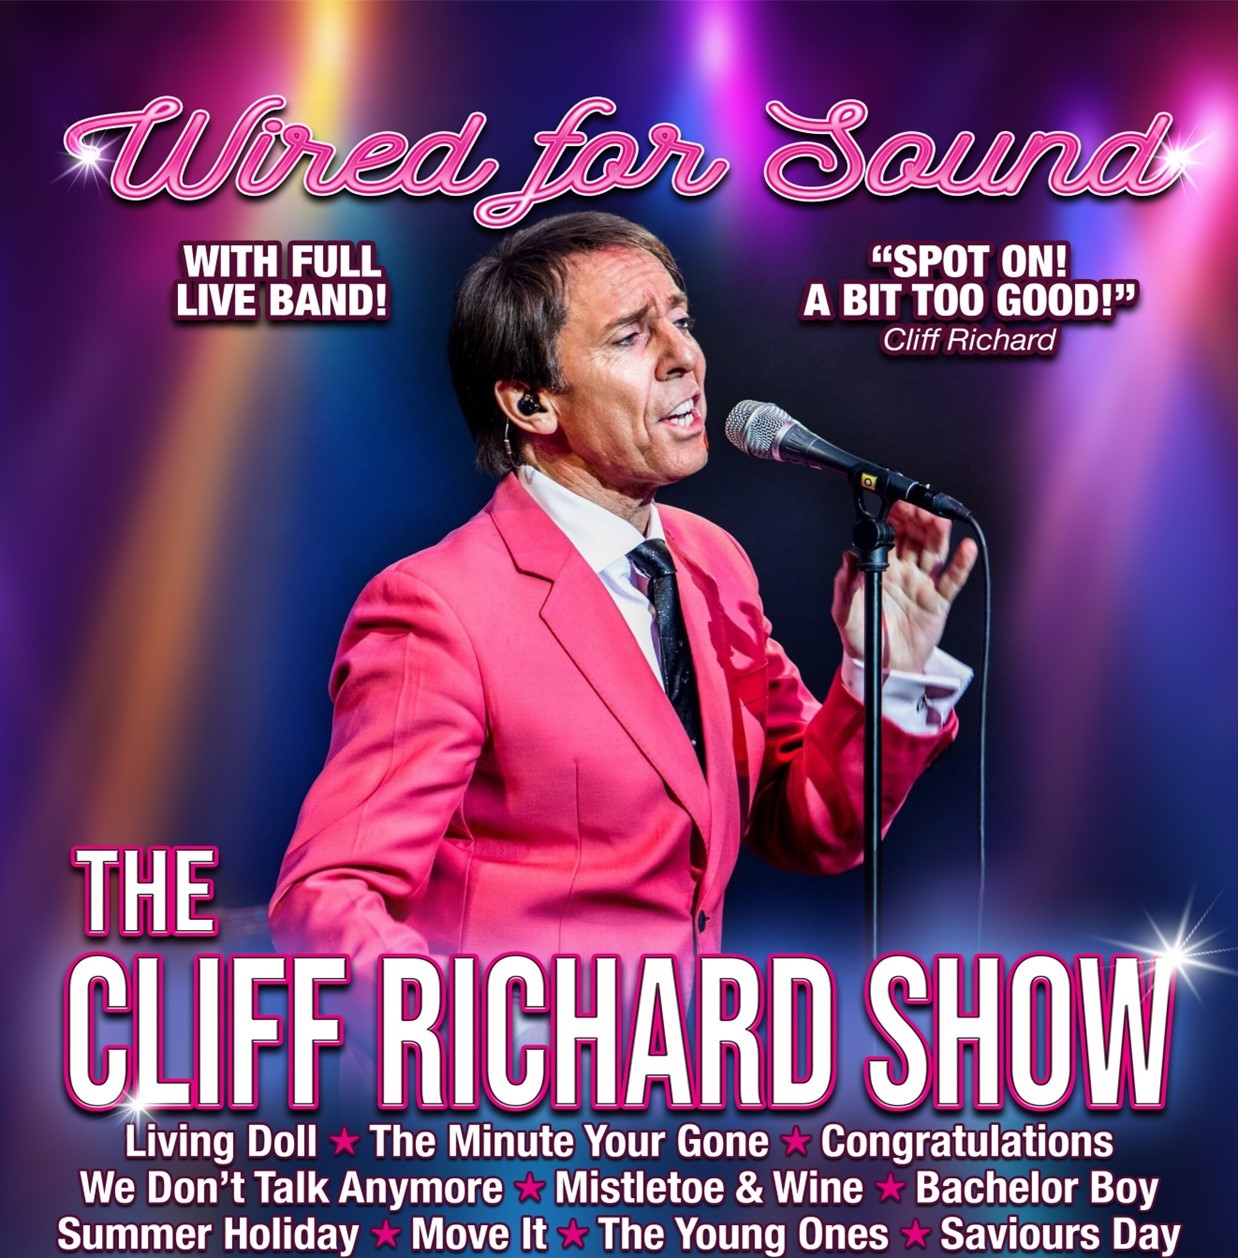 Wired For Sound The Cliff Richard Tribute Show on nov. 08, 19:30@Standard capacity - Elegir asientoCompra entradas y obtén información enSutton Coldfield Town Hall 